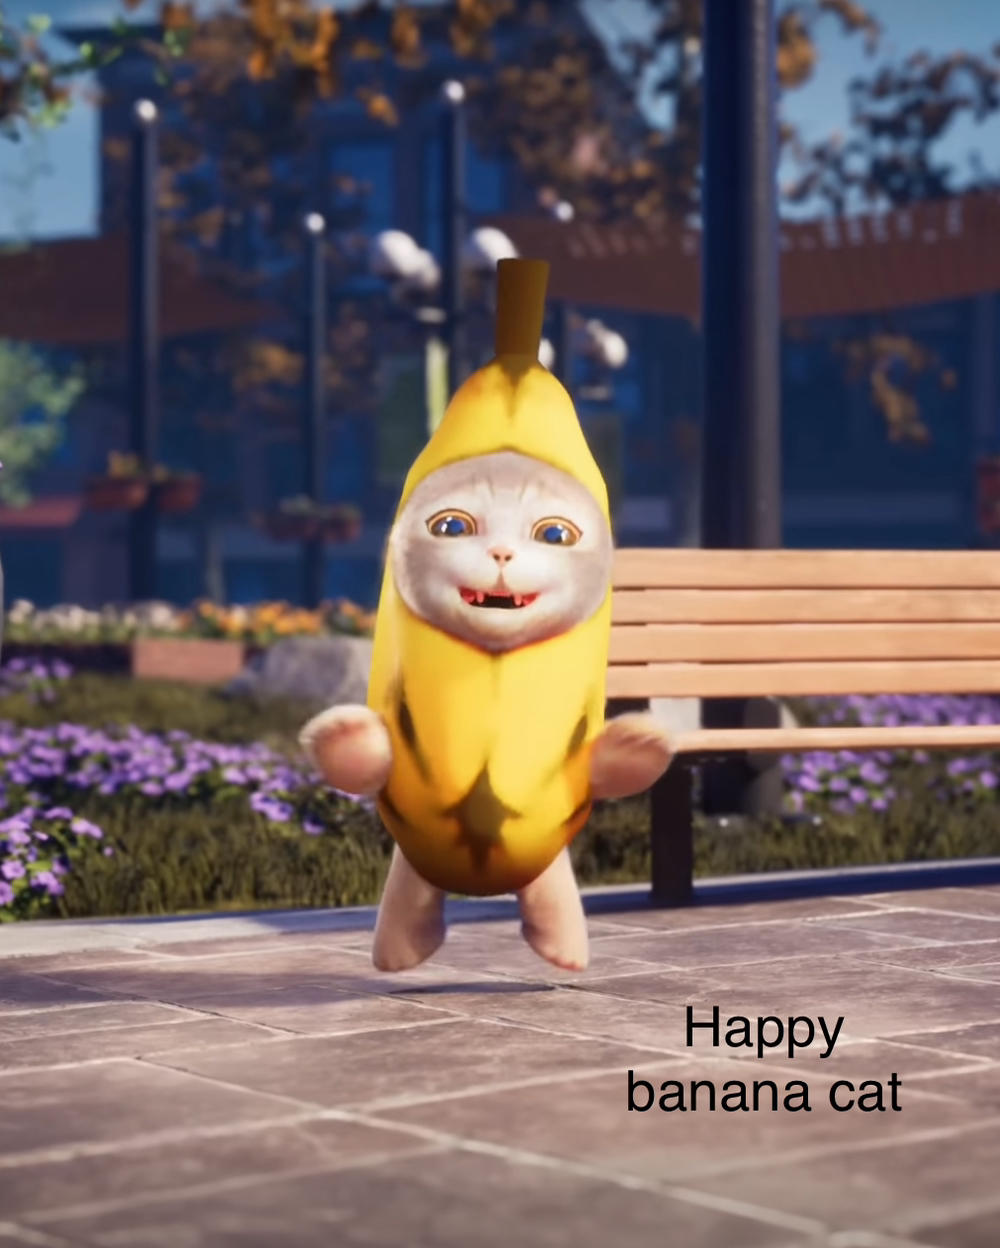 Banana cat